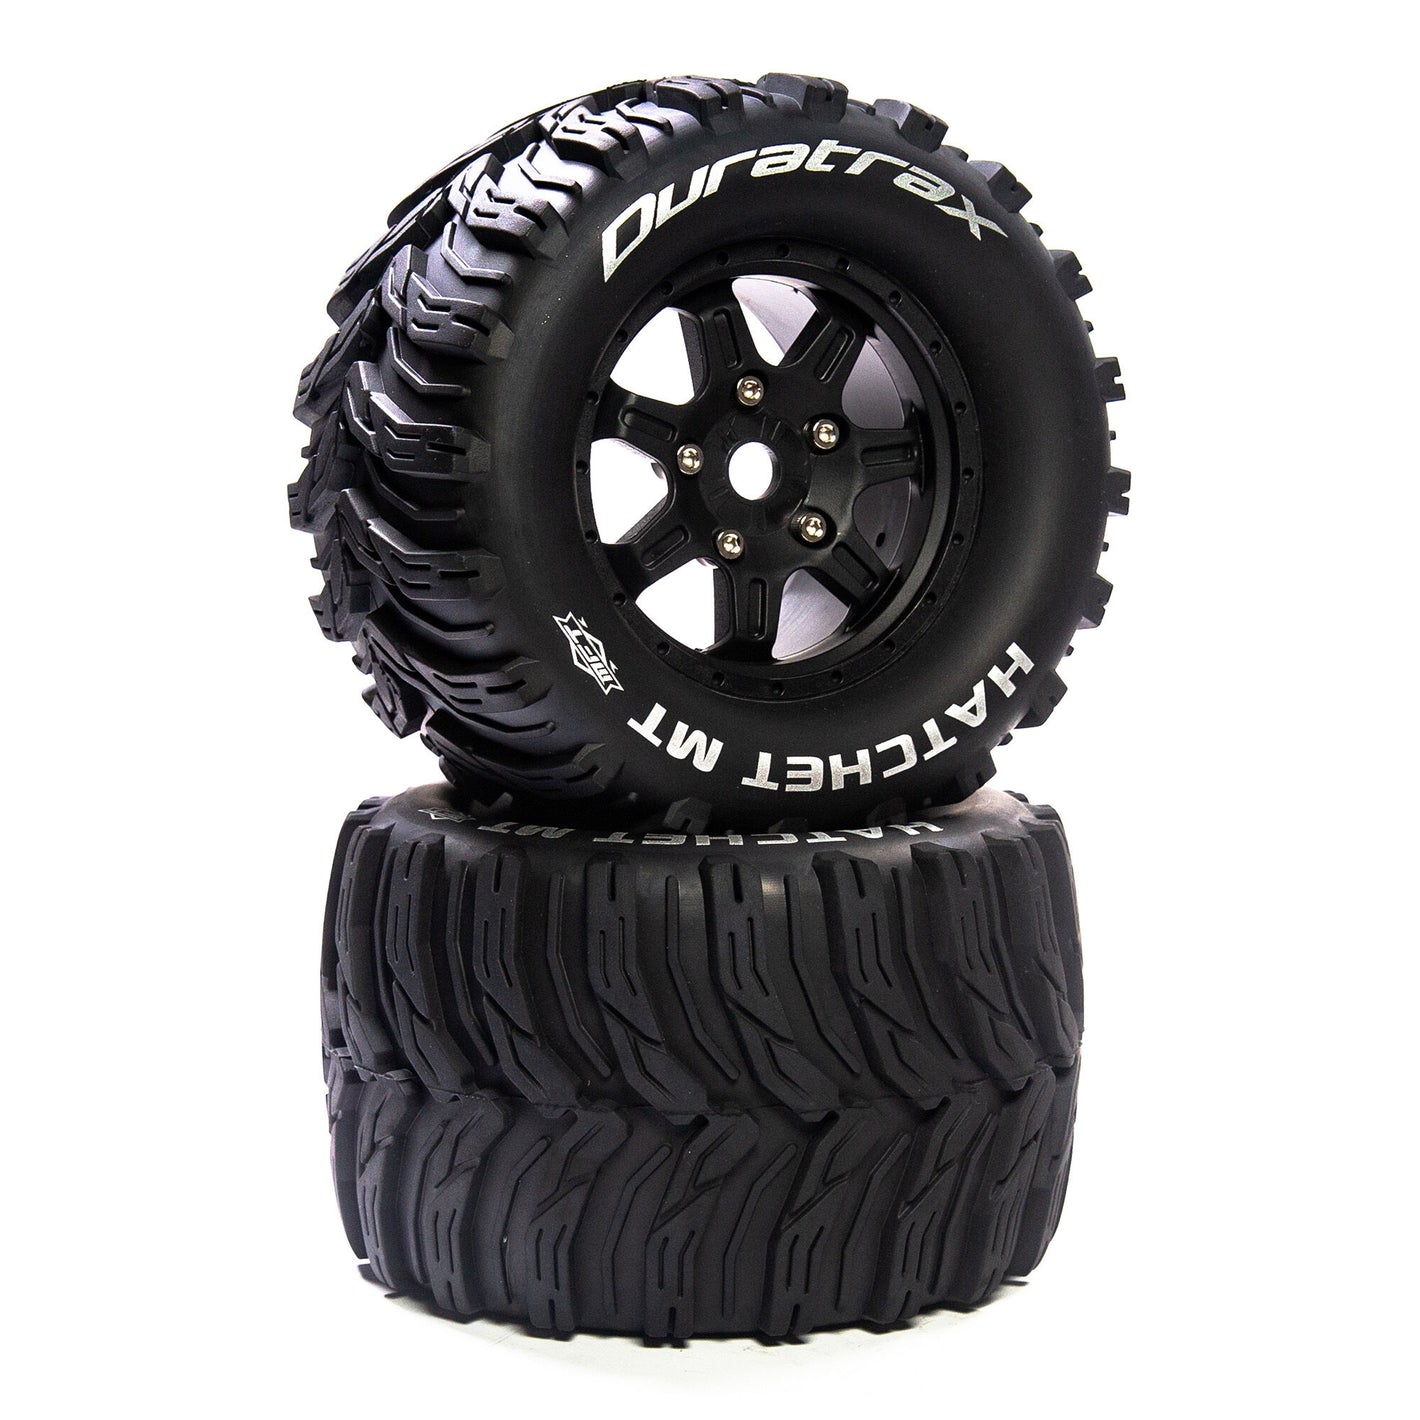 DuraTrax Hatchet MT Belt 3.8" Mounted Front/Rear Tires 0 Offset 17mm, Black (2) DTXC5638